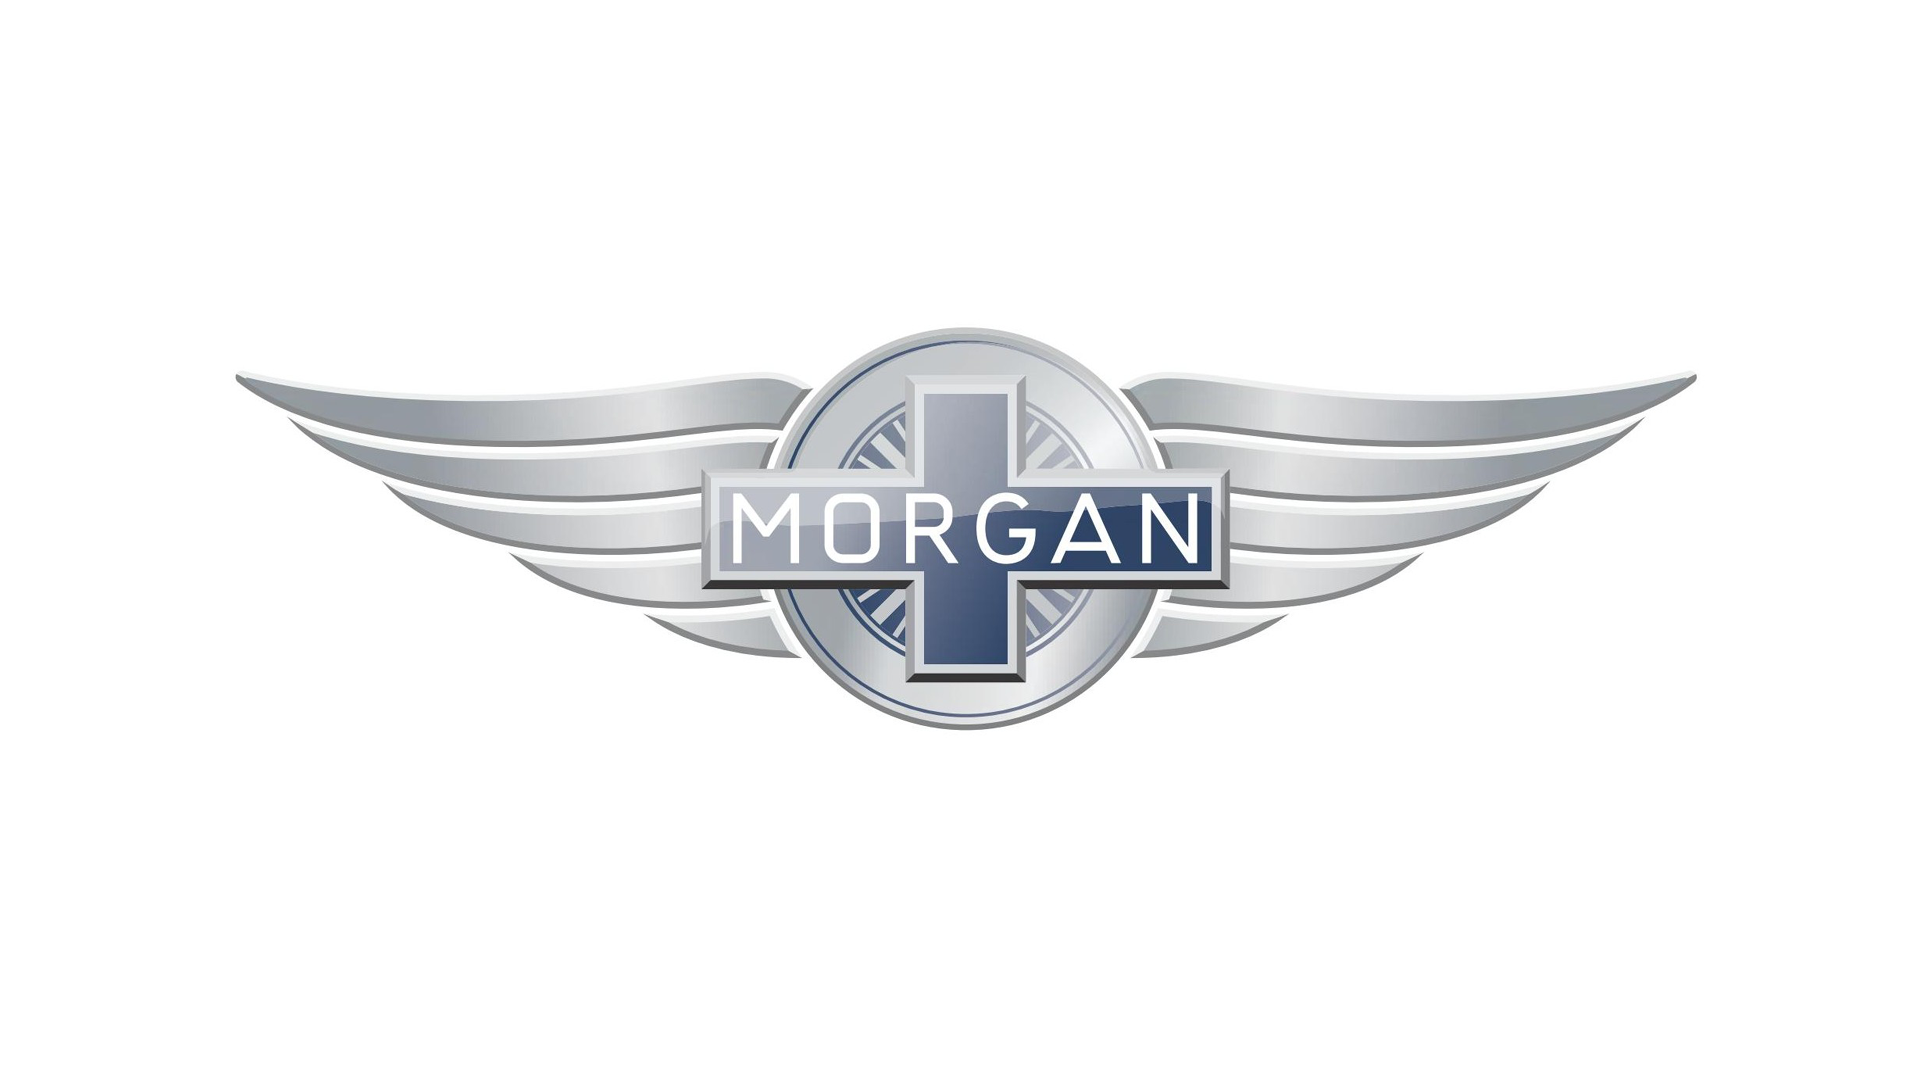 MORGAN Parts & Accessories